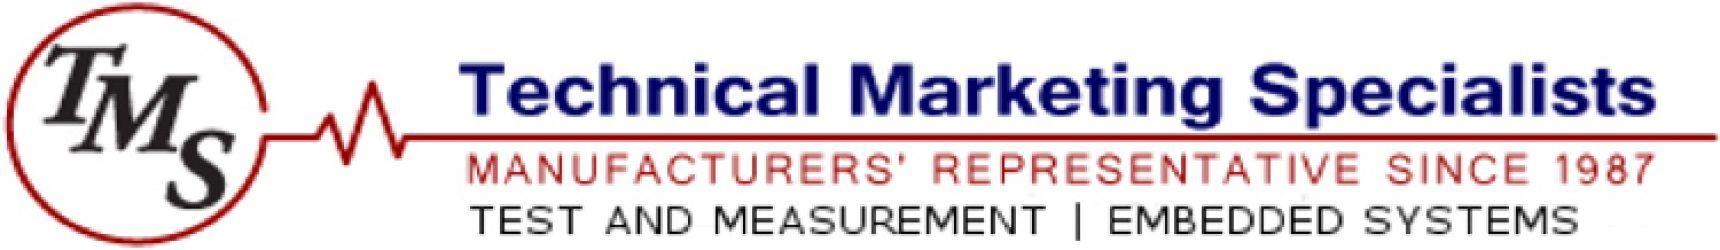 Electronics Manufacturers Logo - Technical Marketing Specialists. Manufacturers' Representative